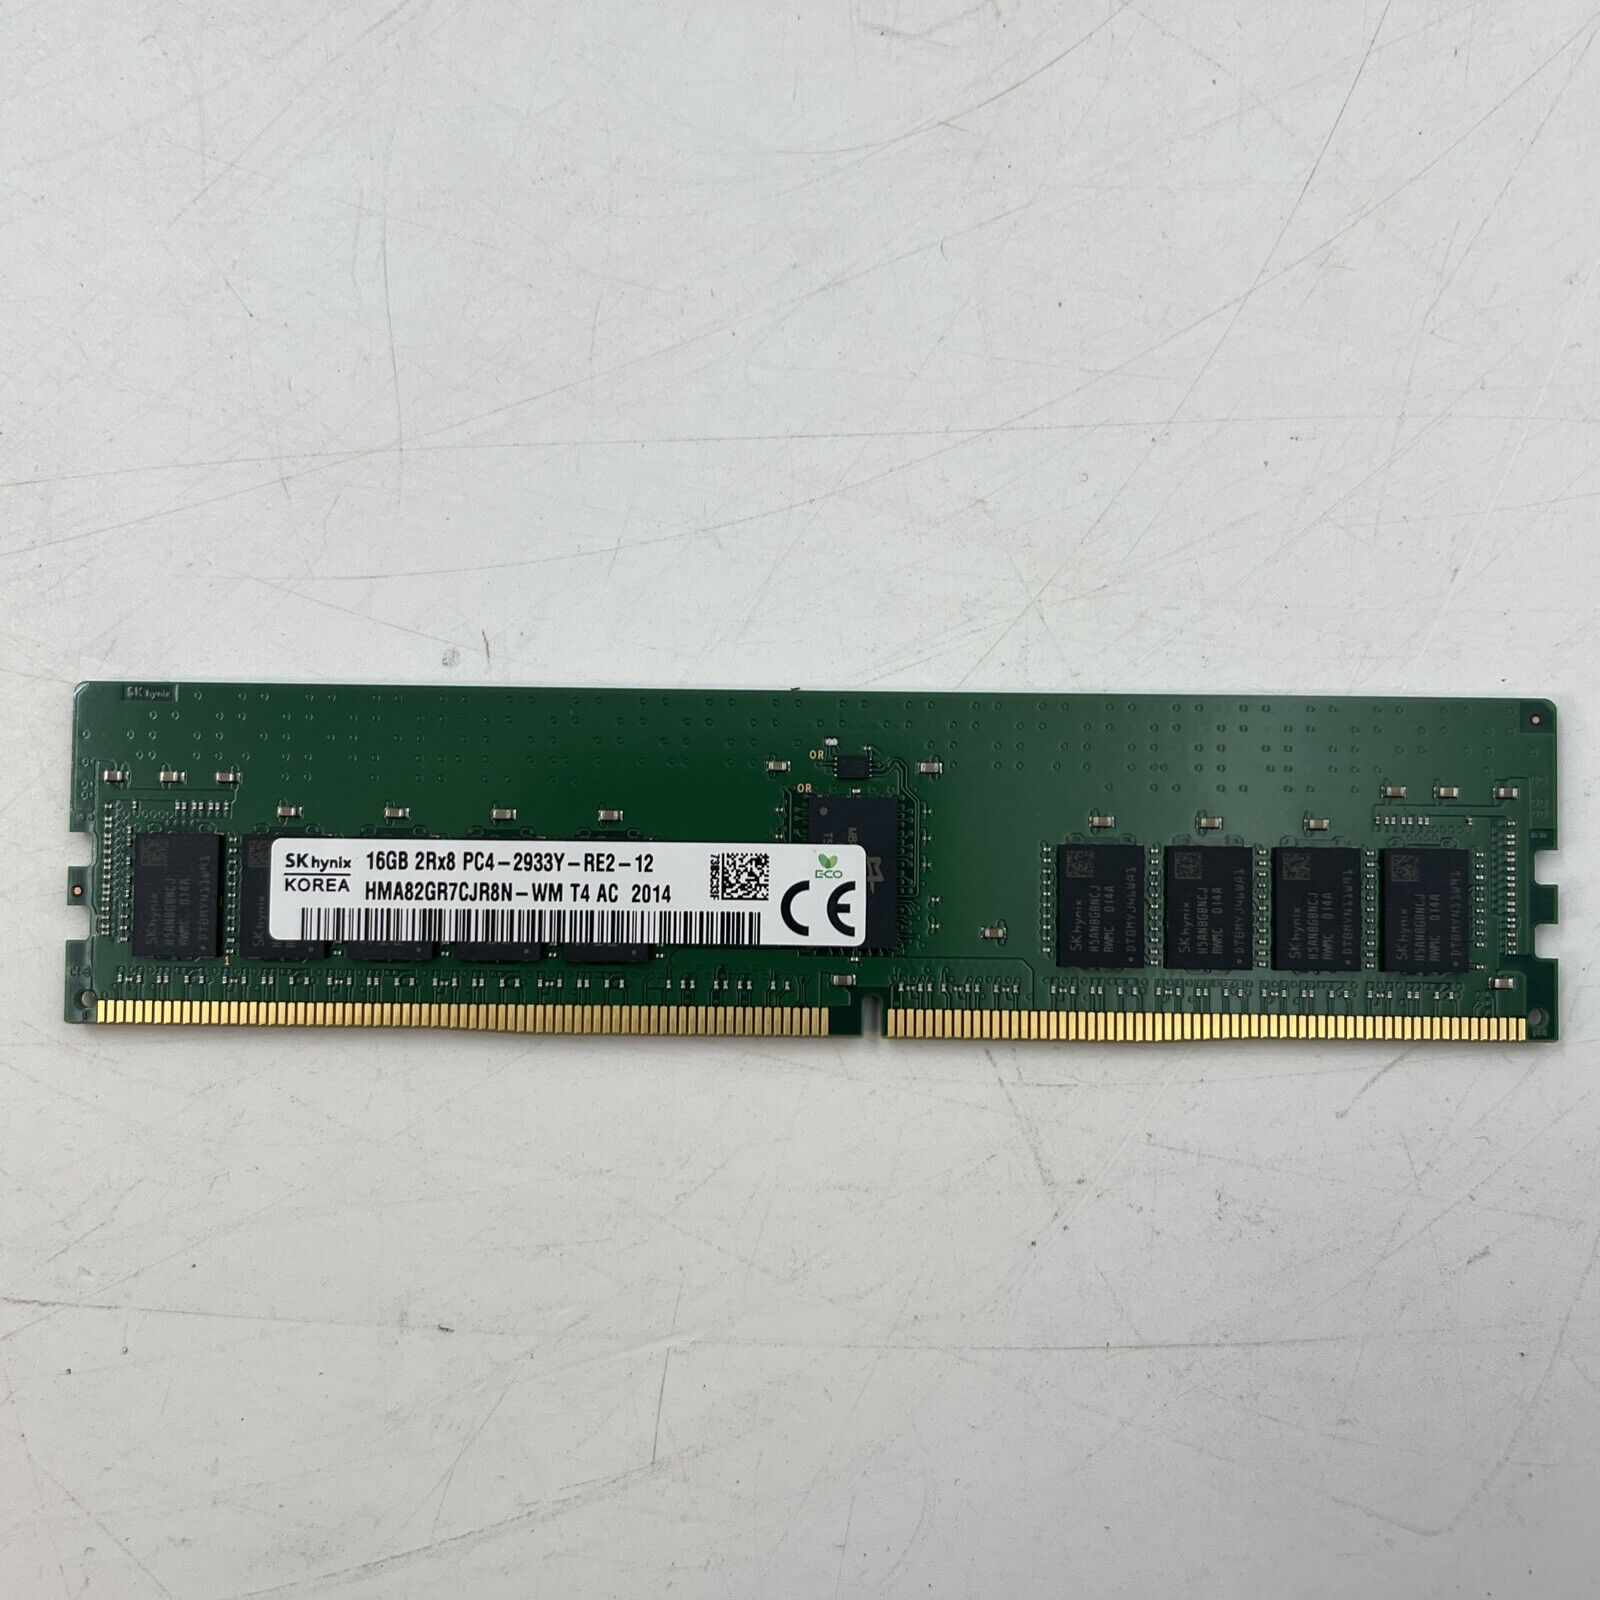 LOT OF 16 SK Hynix 16GB 2Rx8 PC4-2933Y Server Memory #2